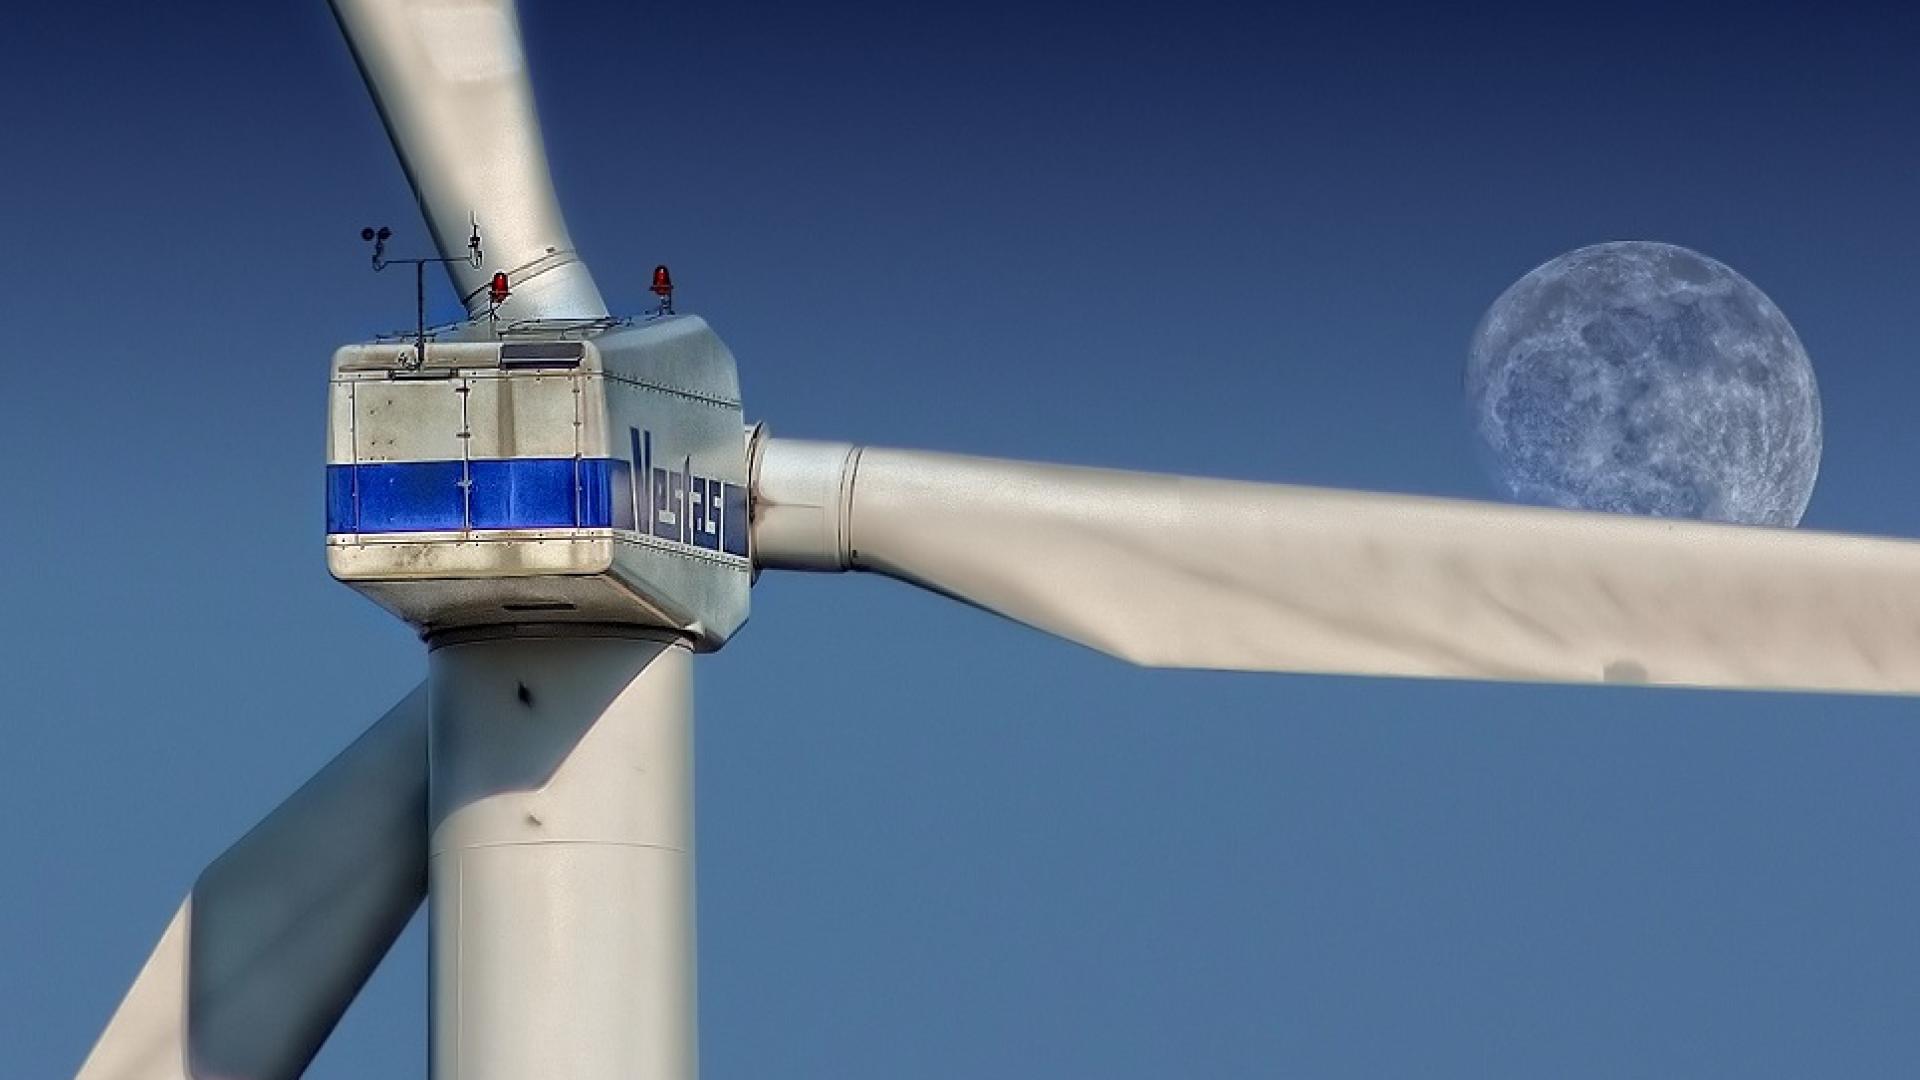 pinwheel-wind-power-enerie-environmental-technology.jpg